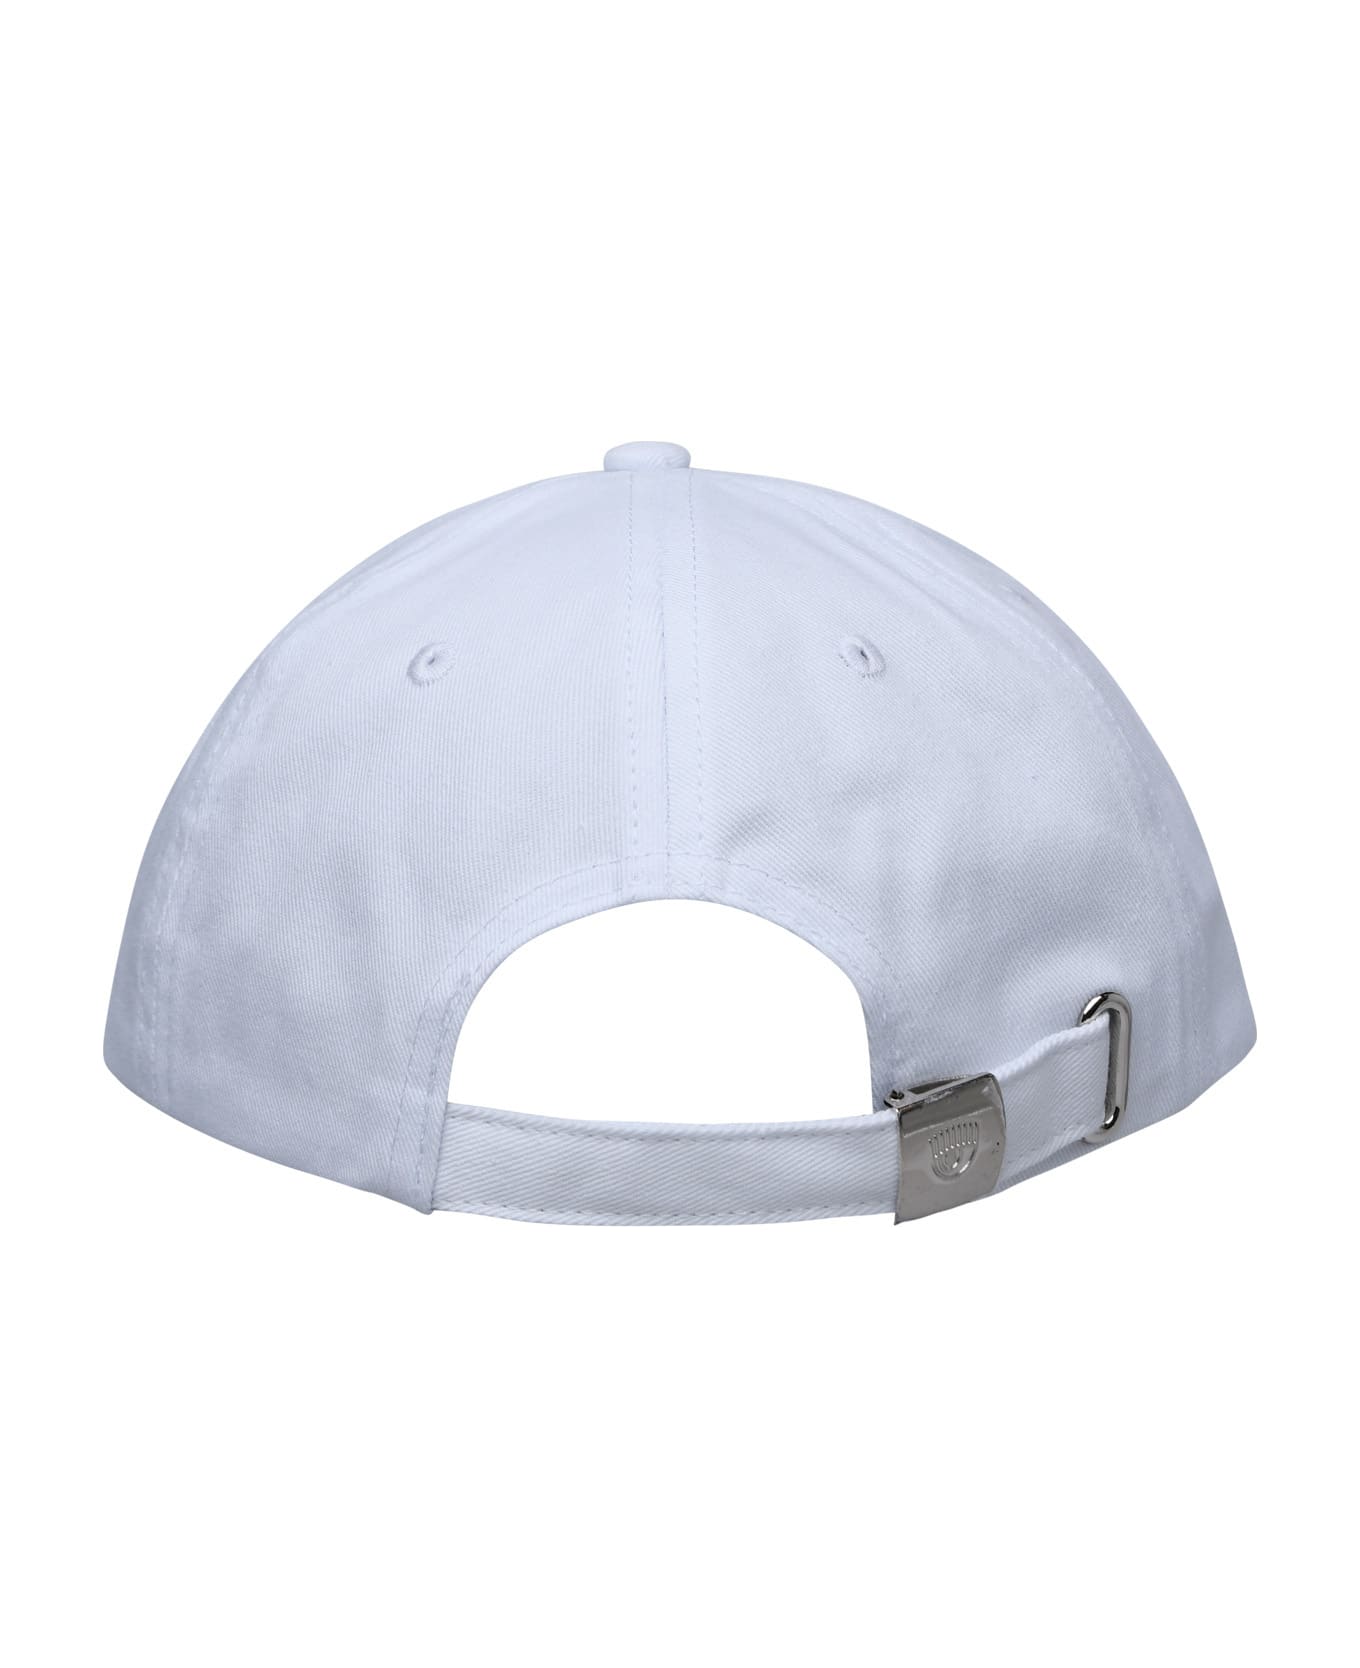 Chiara Ferragni White Cotton Cap - White 帽子